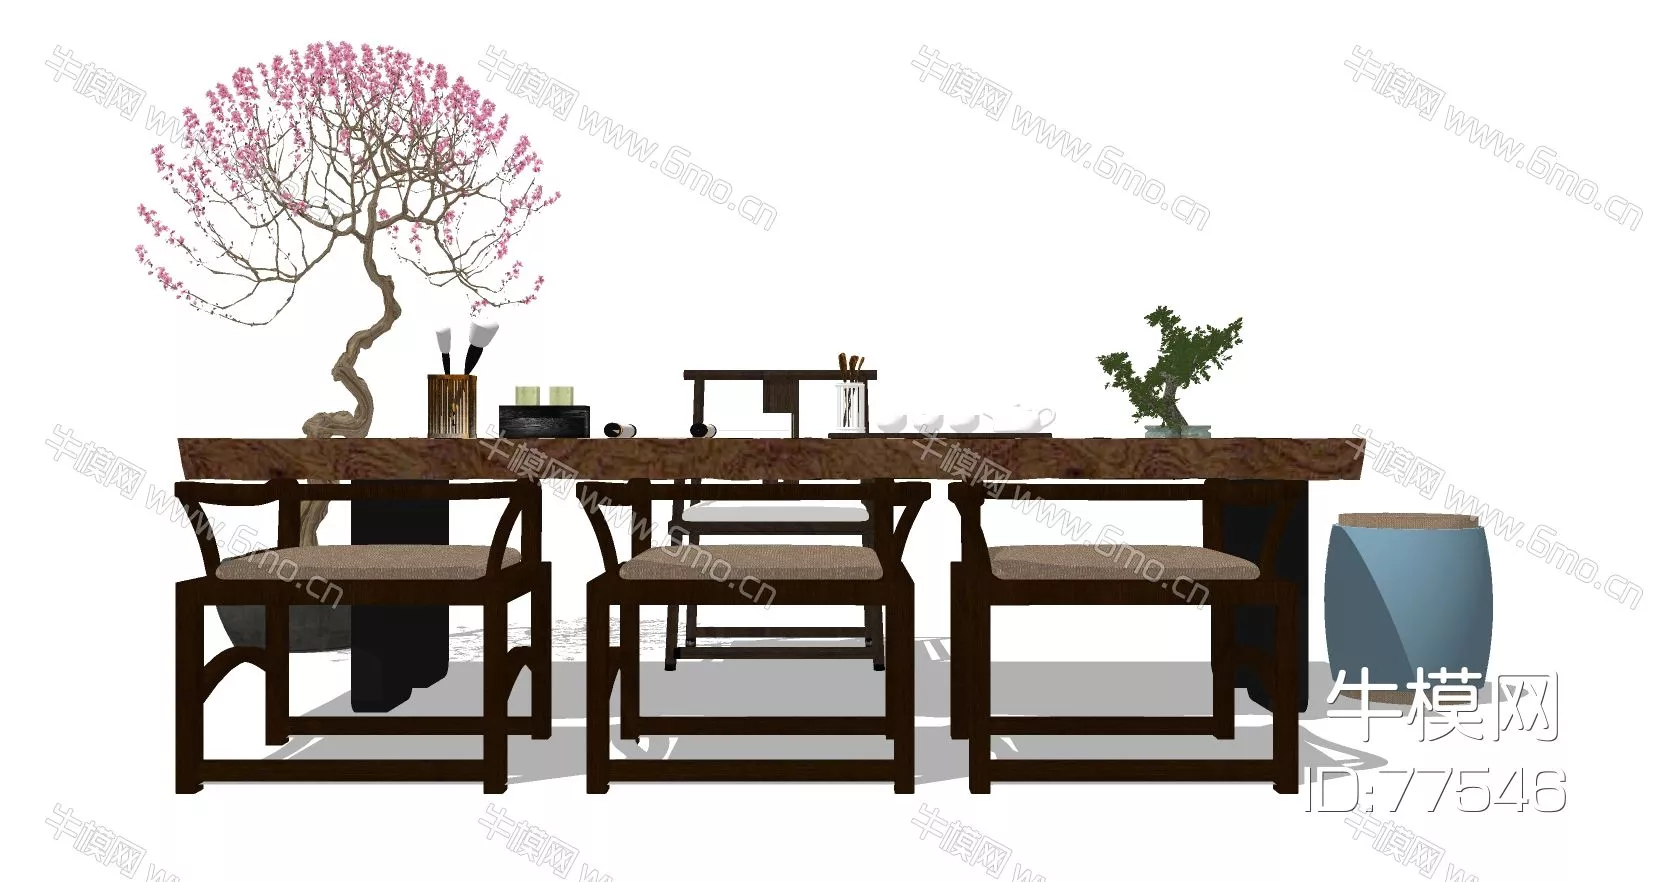 CHINESE TEA TABLE SET - SKETCHUP 3D MODEL - ENSCAPE - 77546